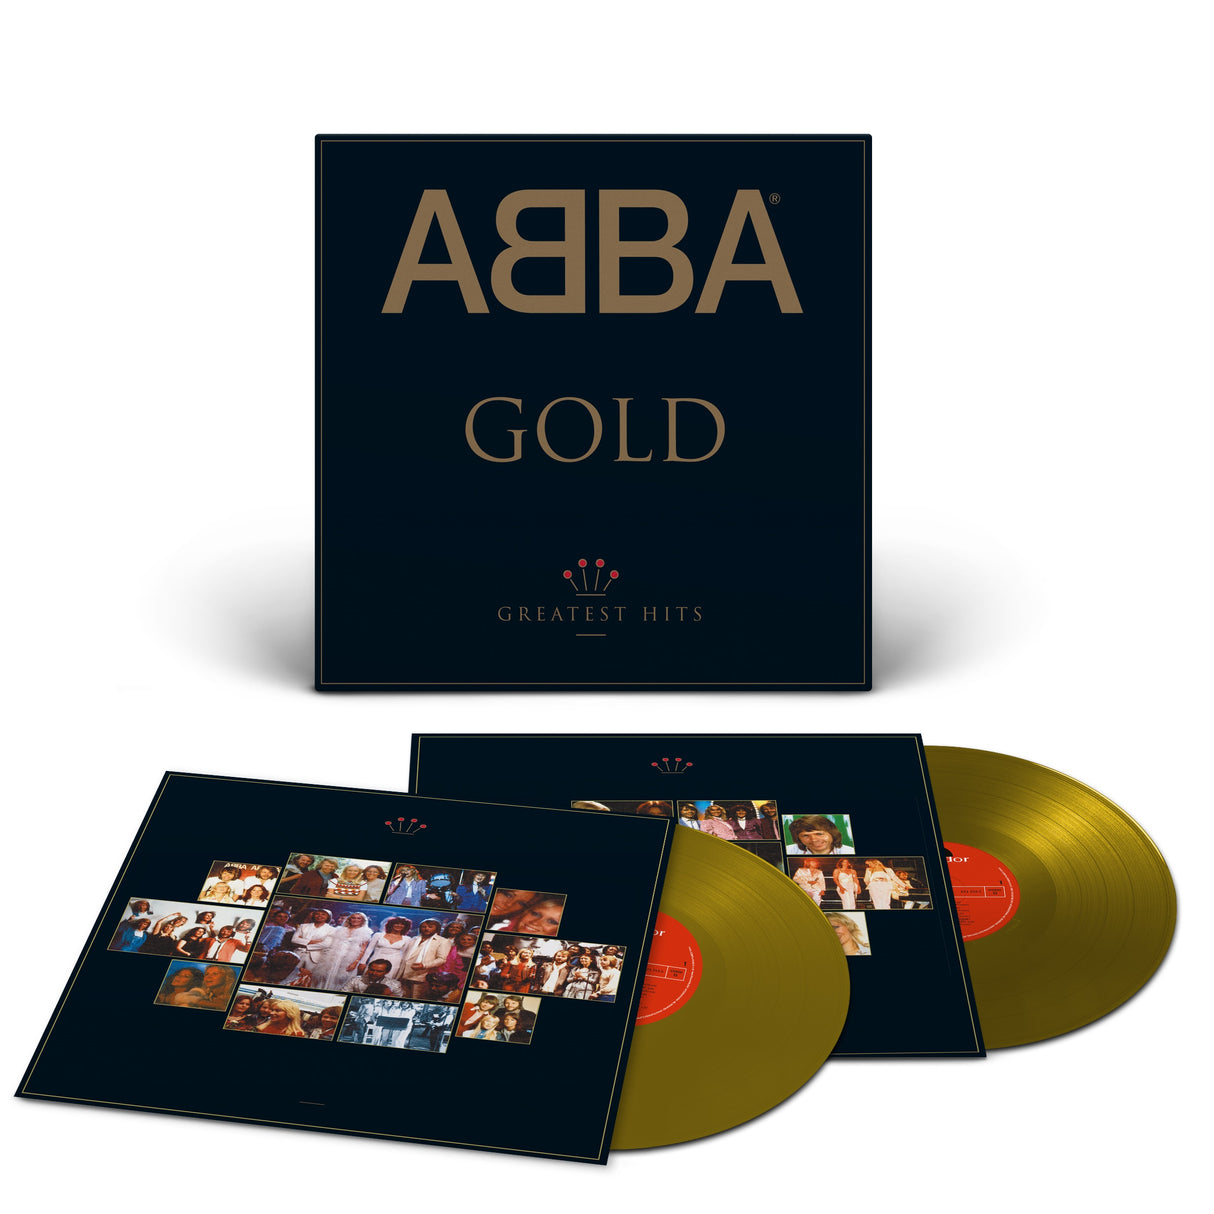 ABBA - Gold - Greatest Hits [Gold 2 LP] [Vinyl]